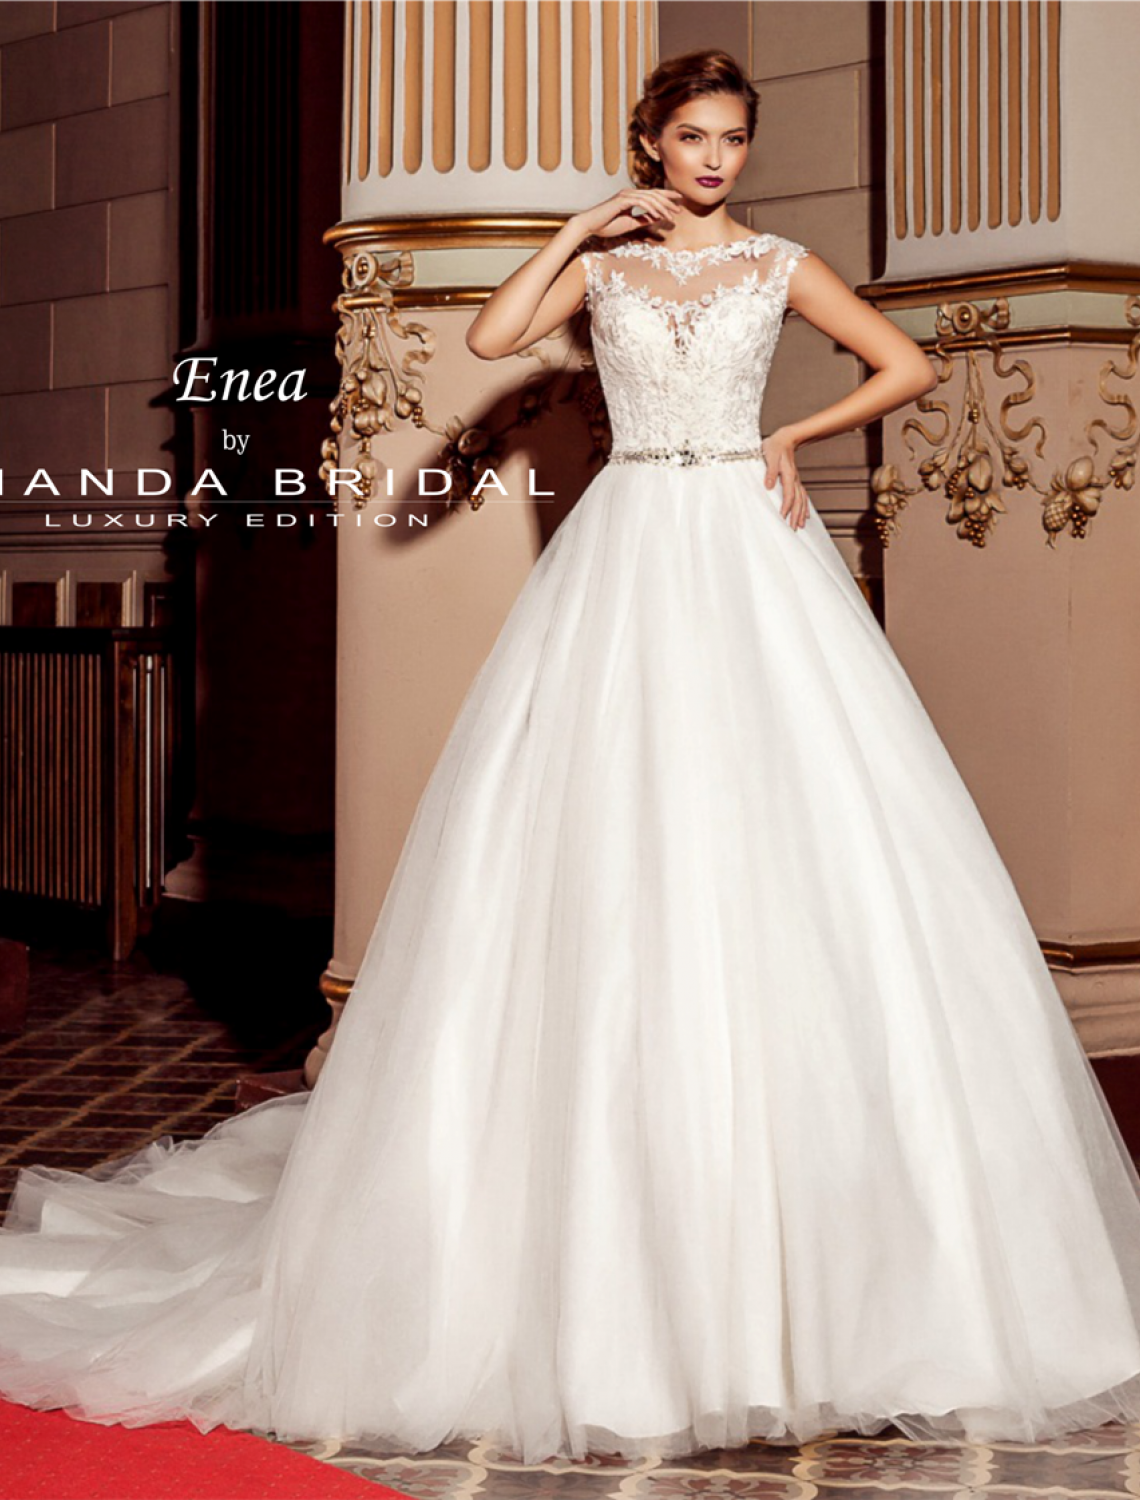 ENEA Amanda Bridal by Elite Mariaj